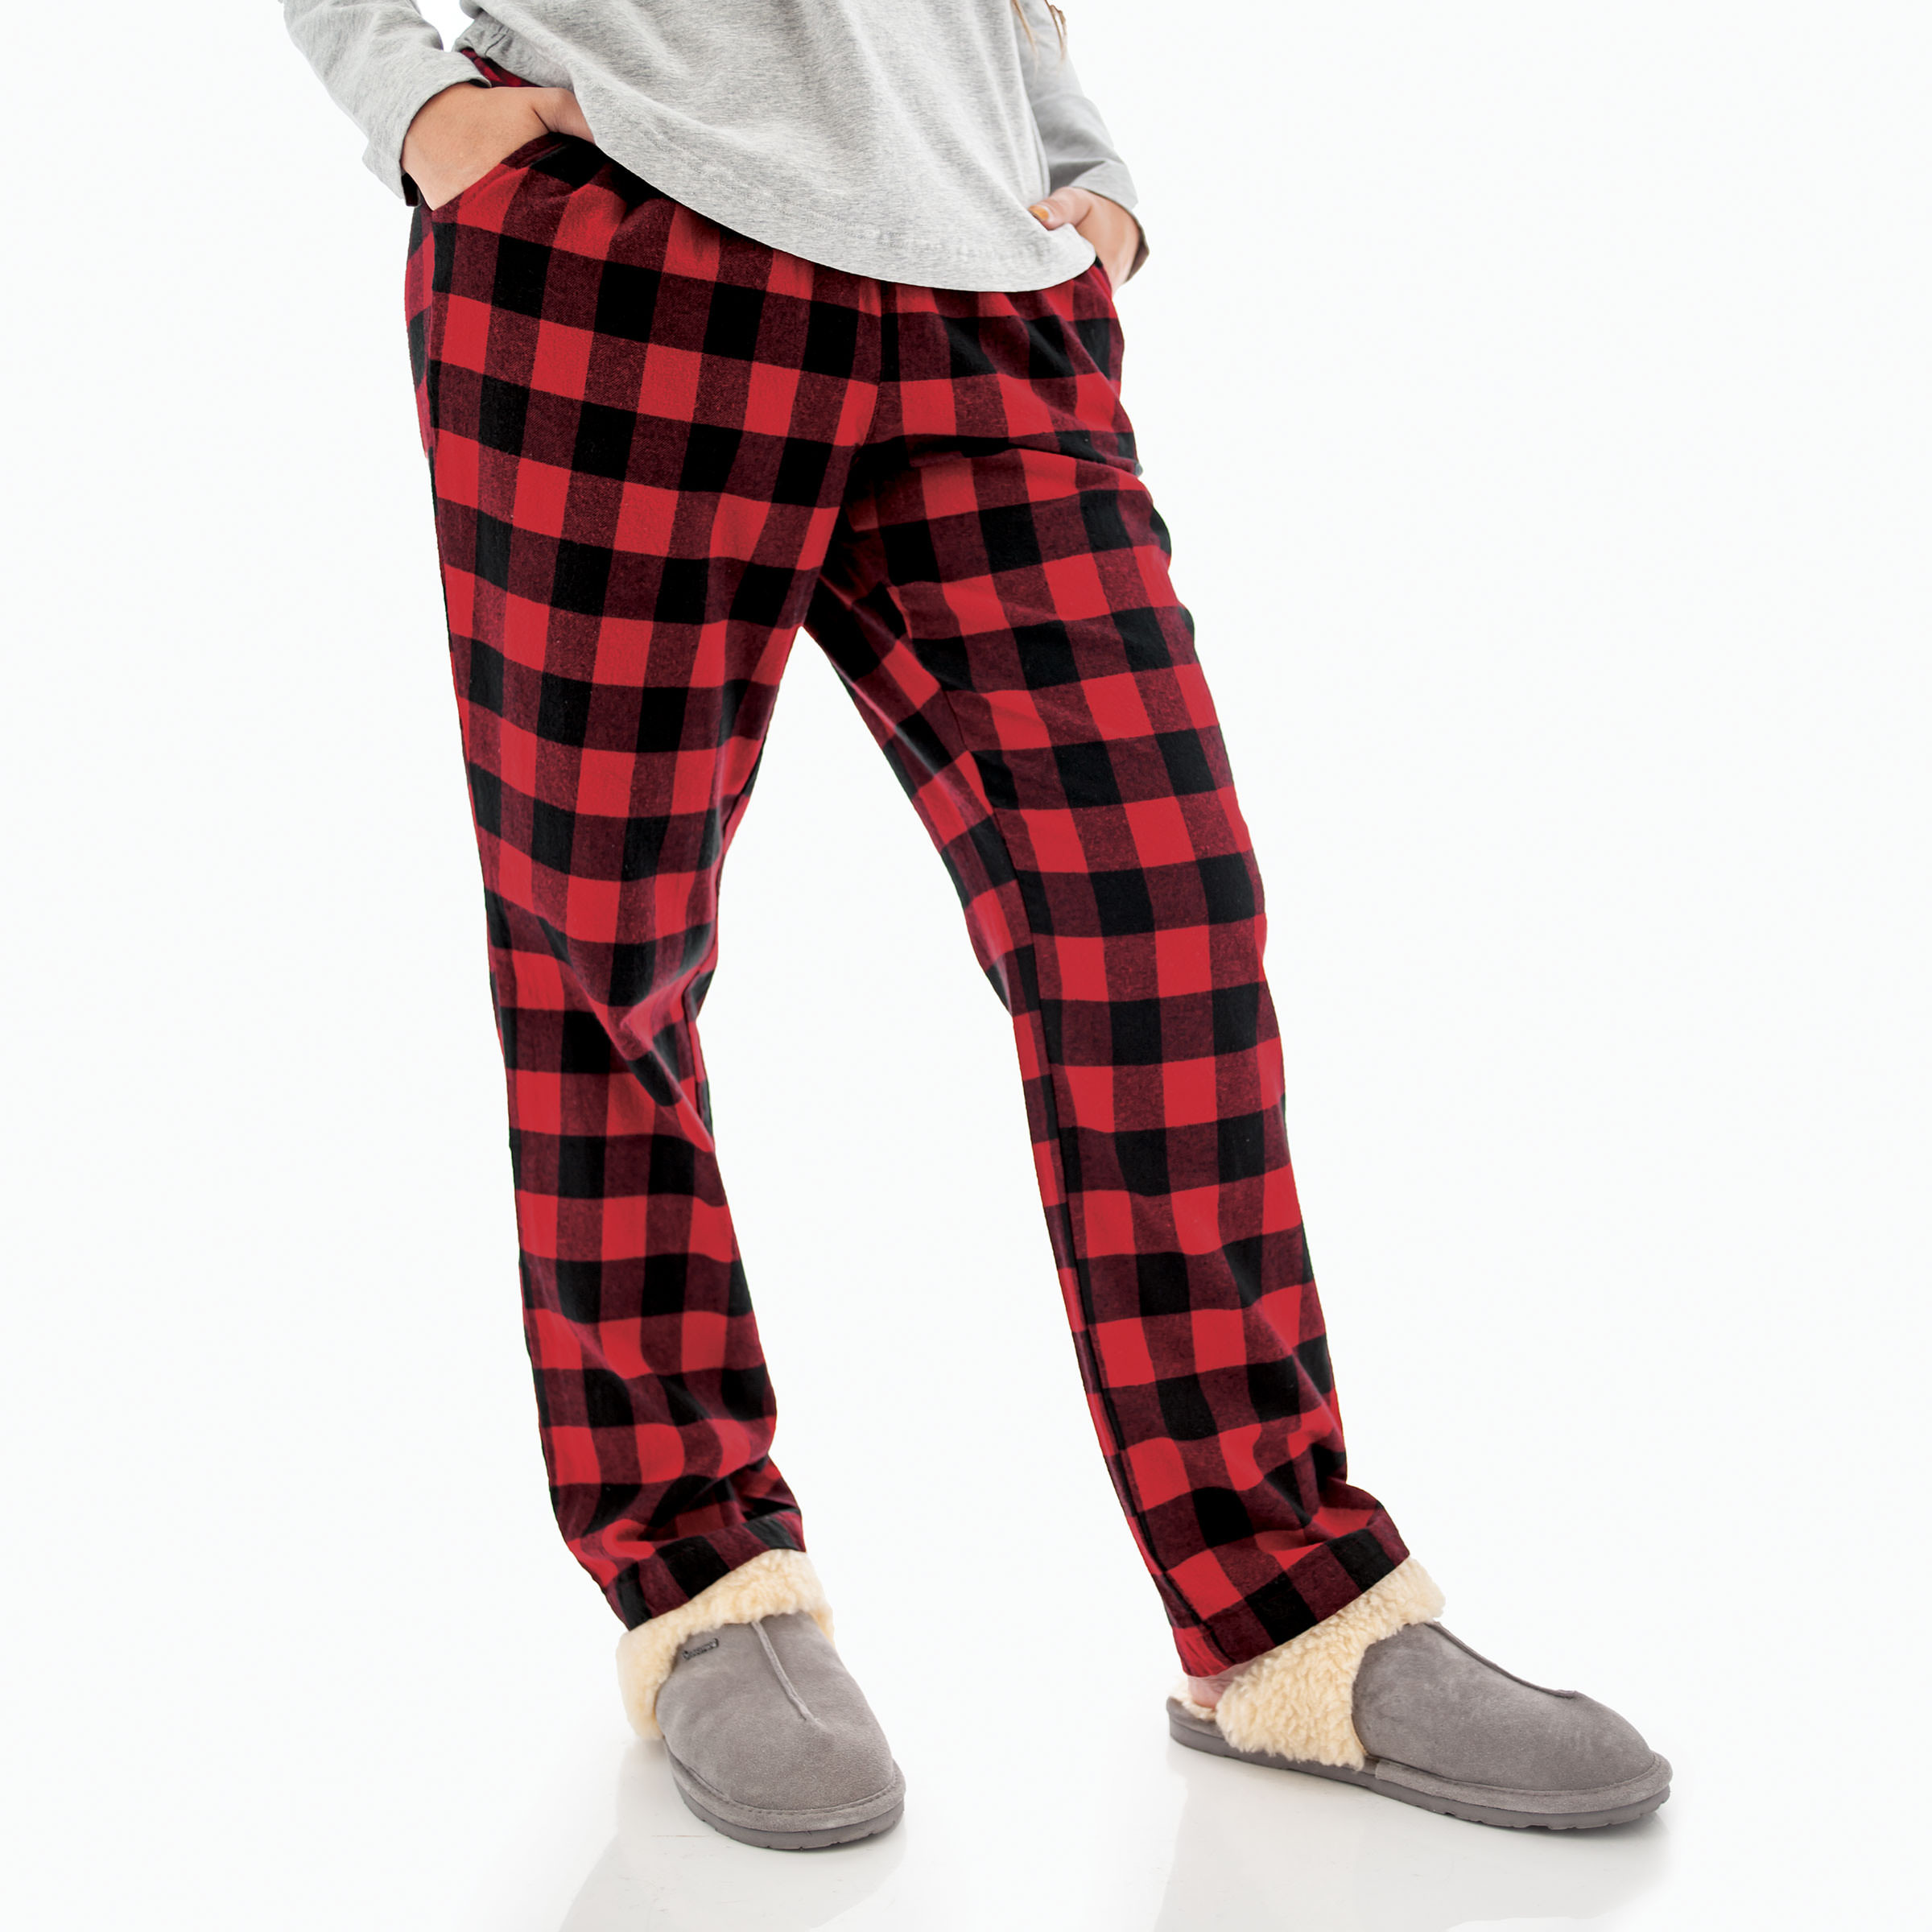 Plaid pajama pants – The best pajama pants with free shipping